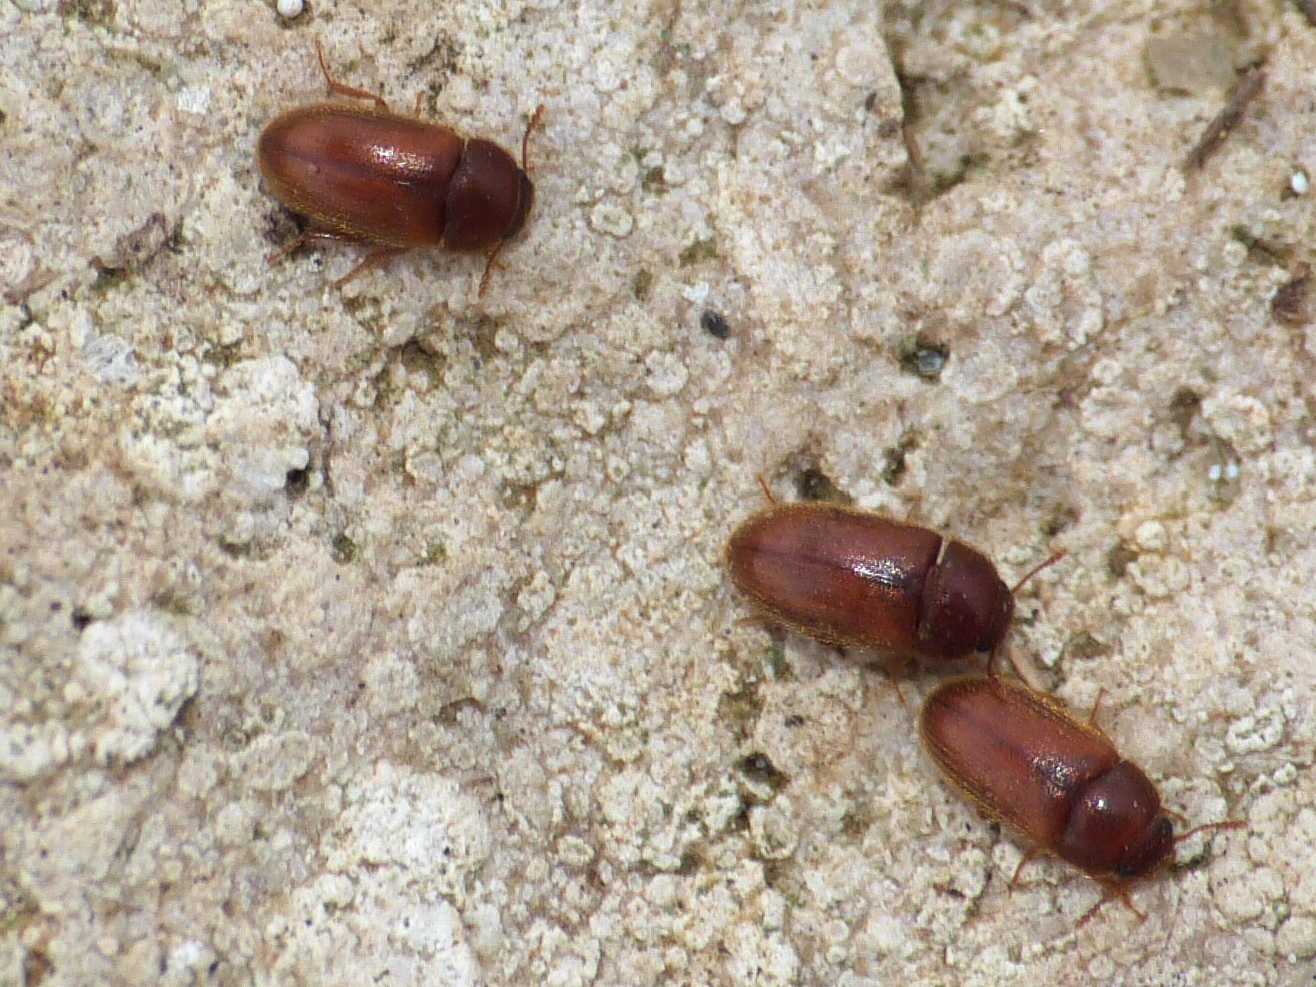 Typhaea stercorea (Mycetophagidae)(cfr.) e Ahasverus advena (Silvanidae)